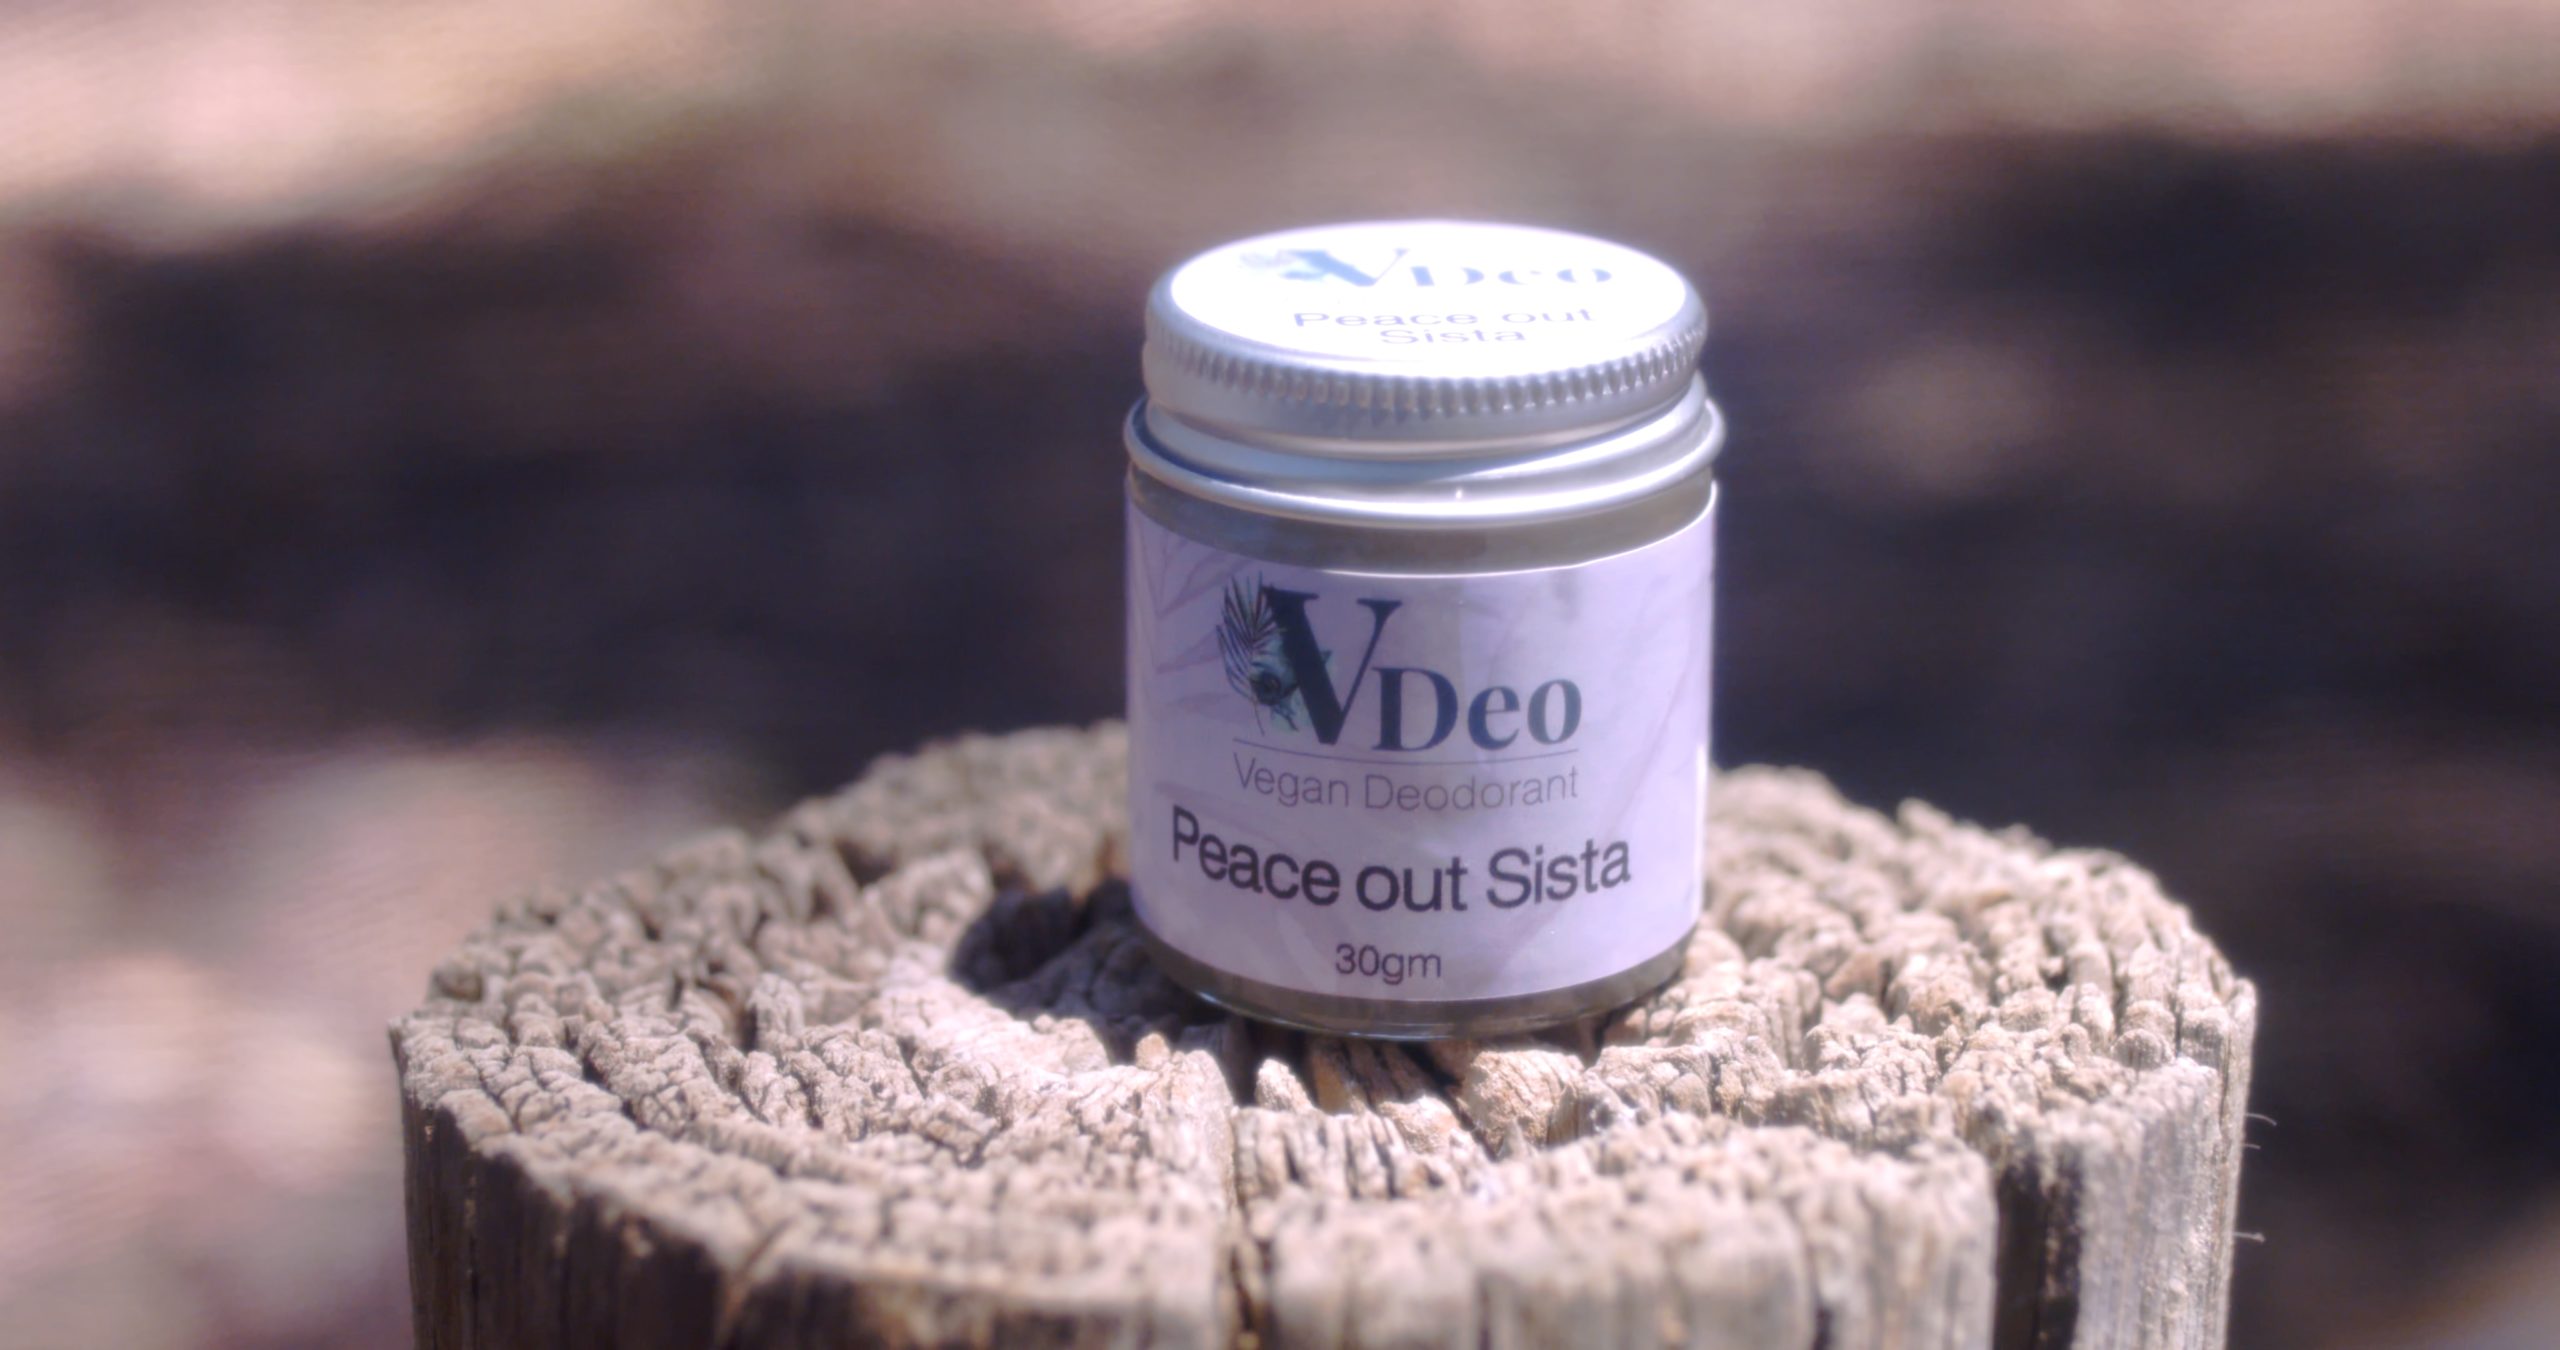 VDeo Vegan Deodorant Peace Out Sista 30g